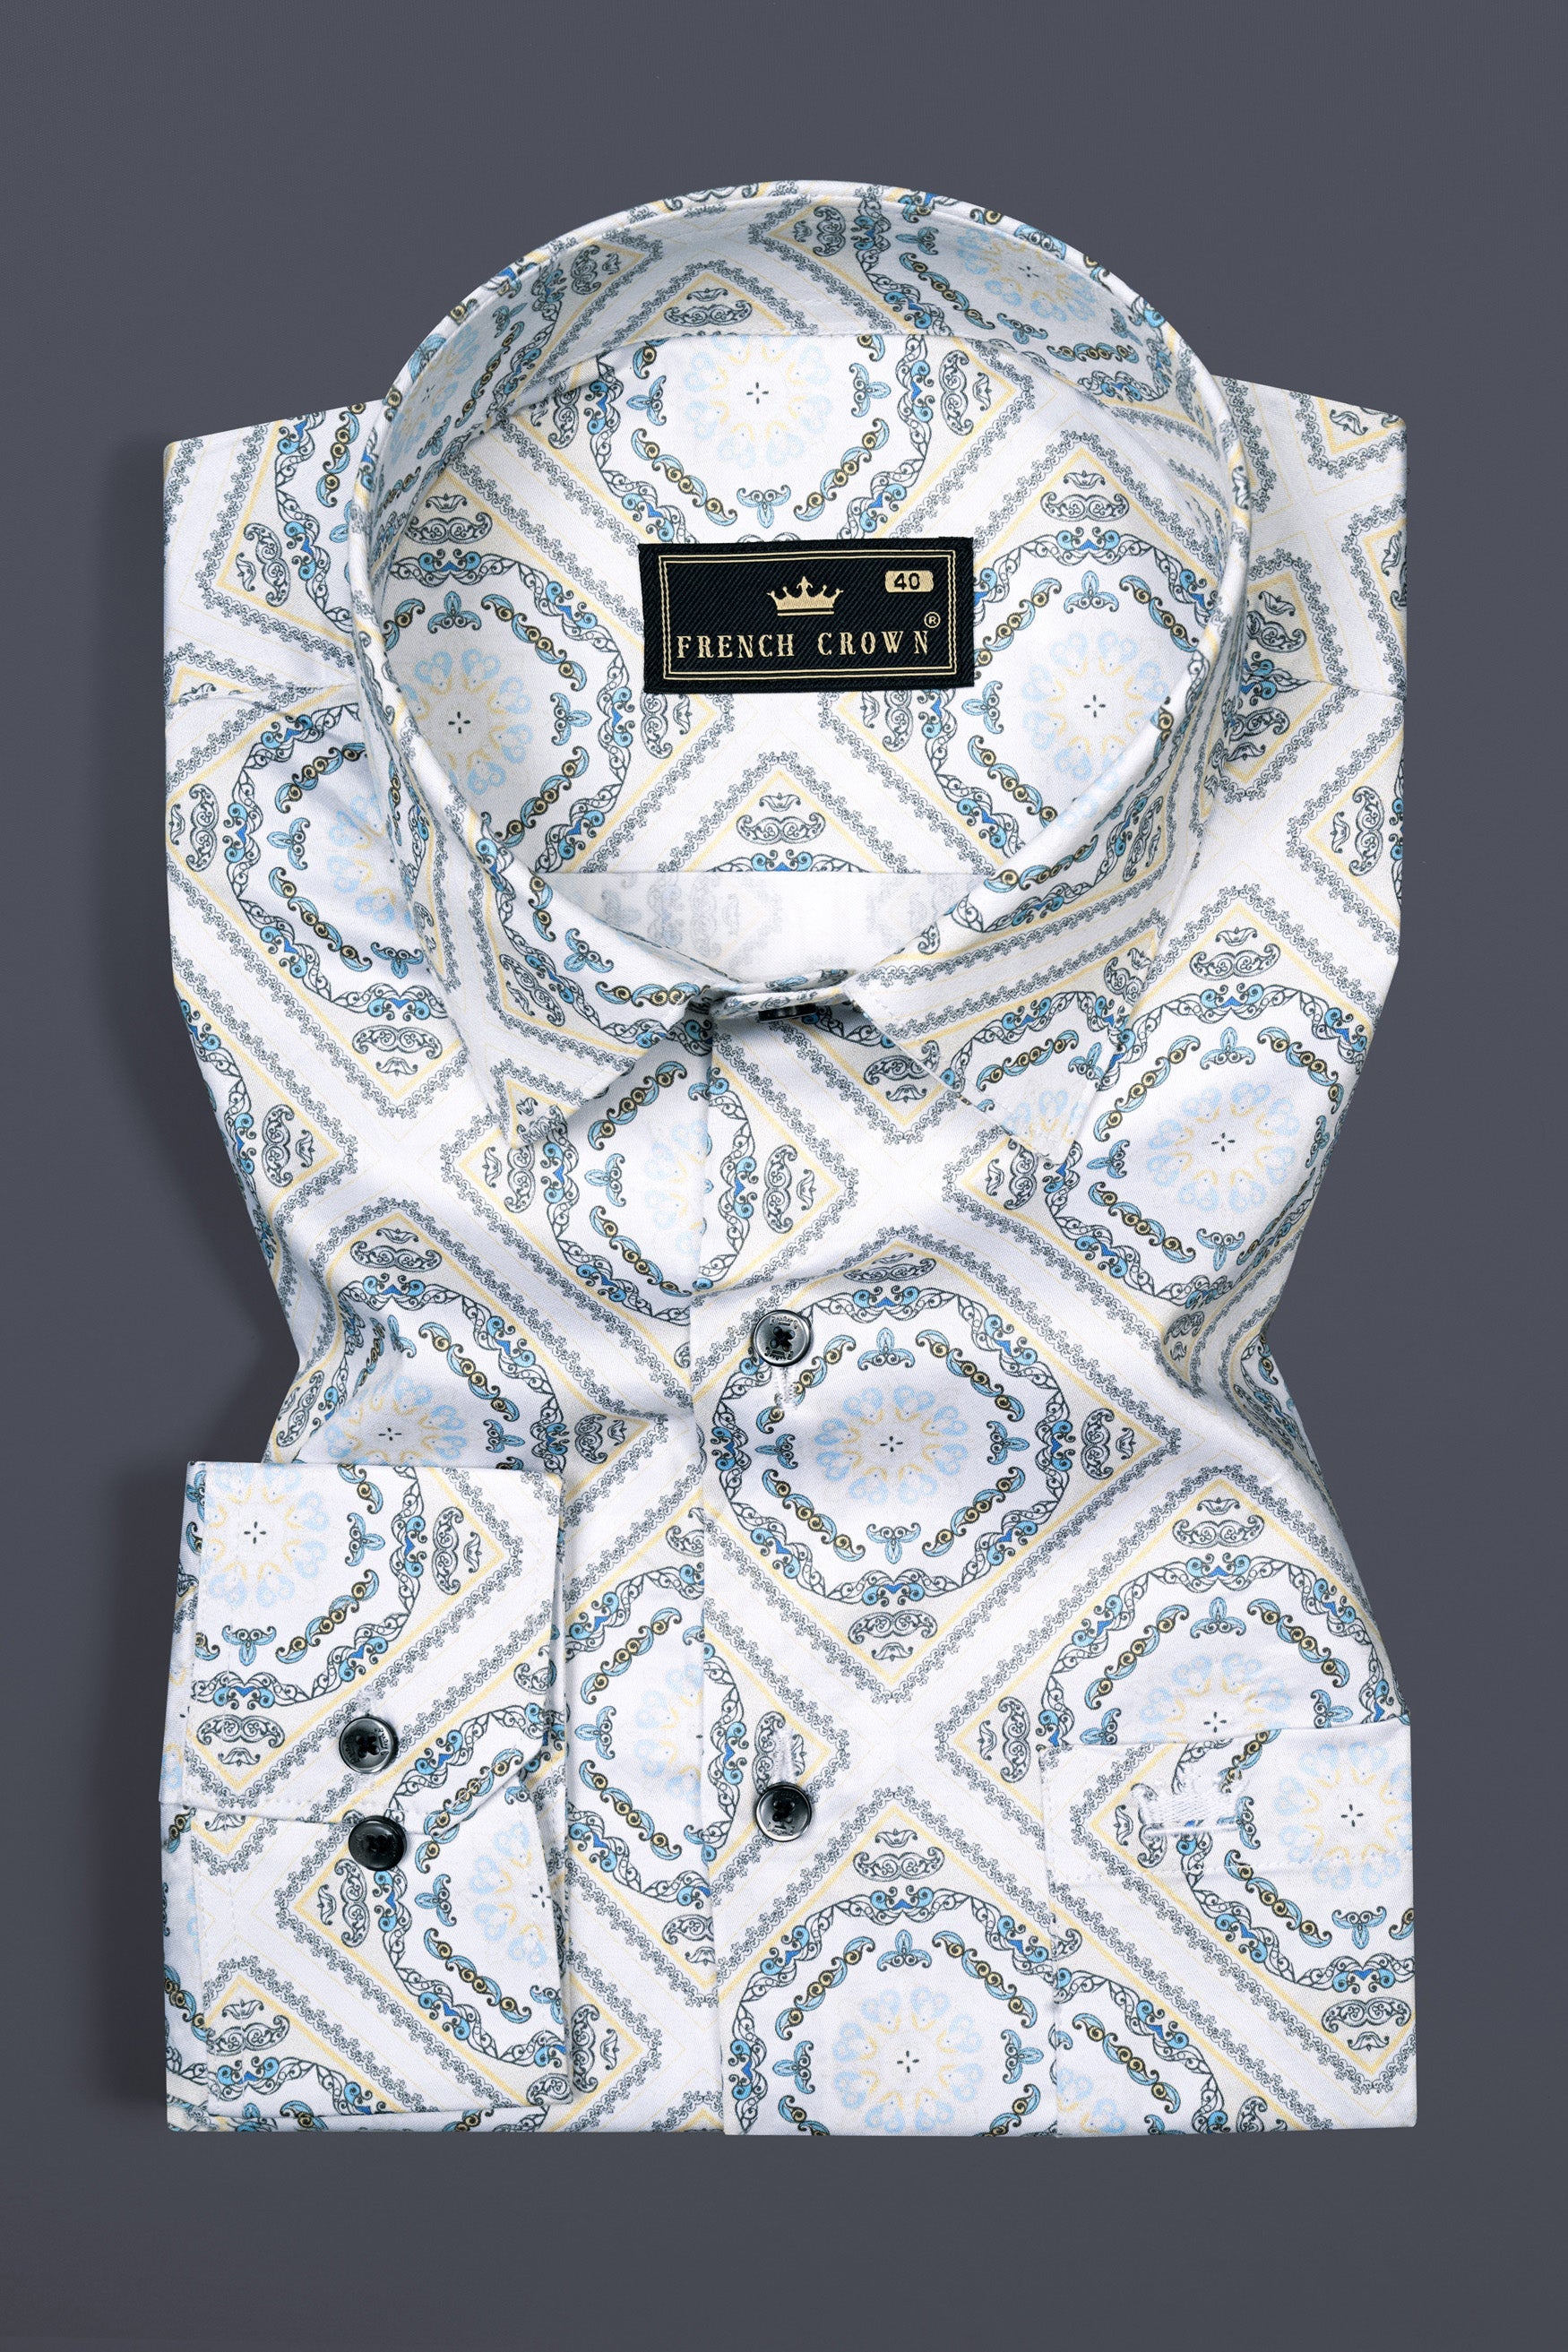 Bright White Geometric Printed Super Soft Premium Cotton Shirt